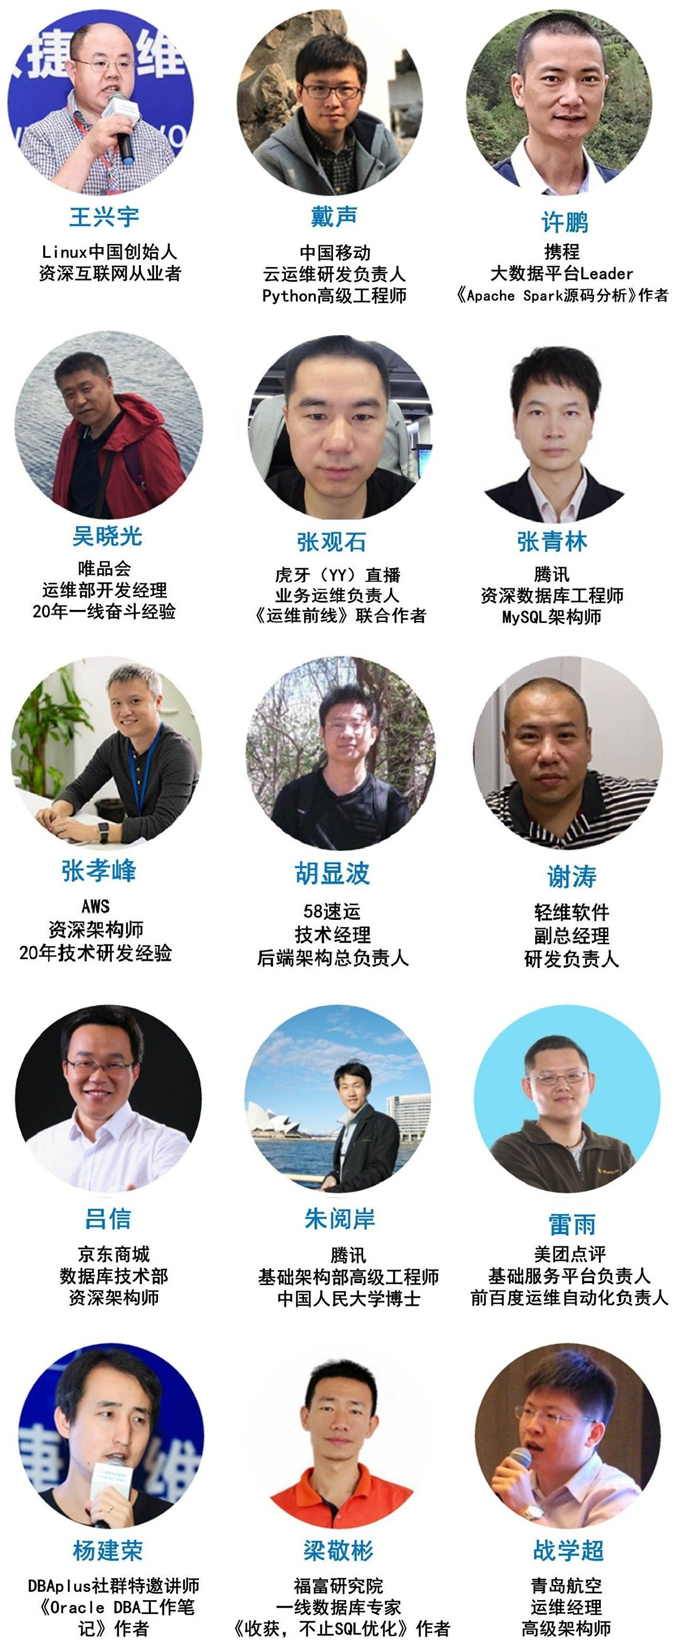 2017 Gdevops全球敏捷运维峰会将于广州收官!